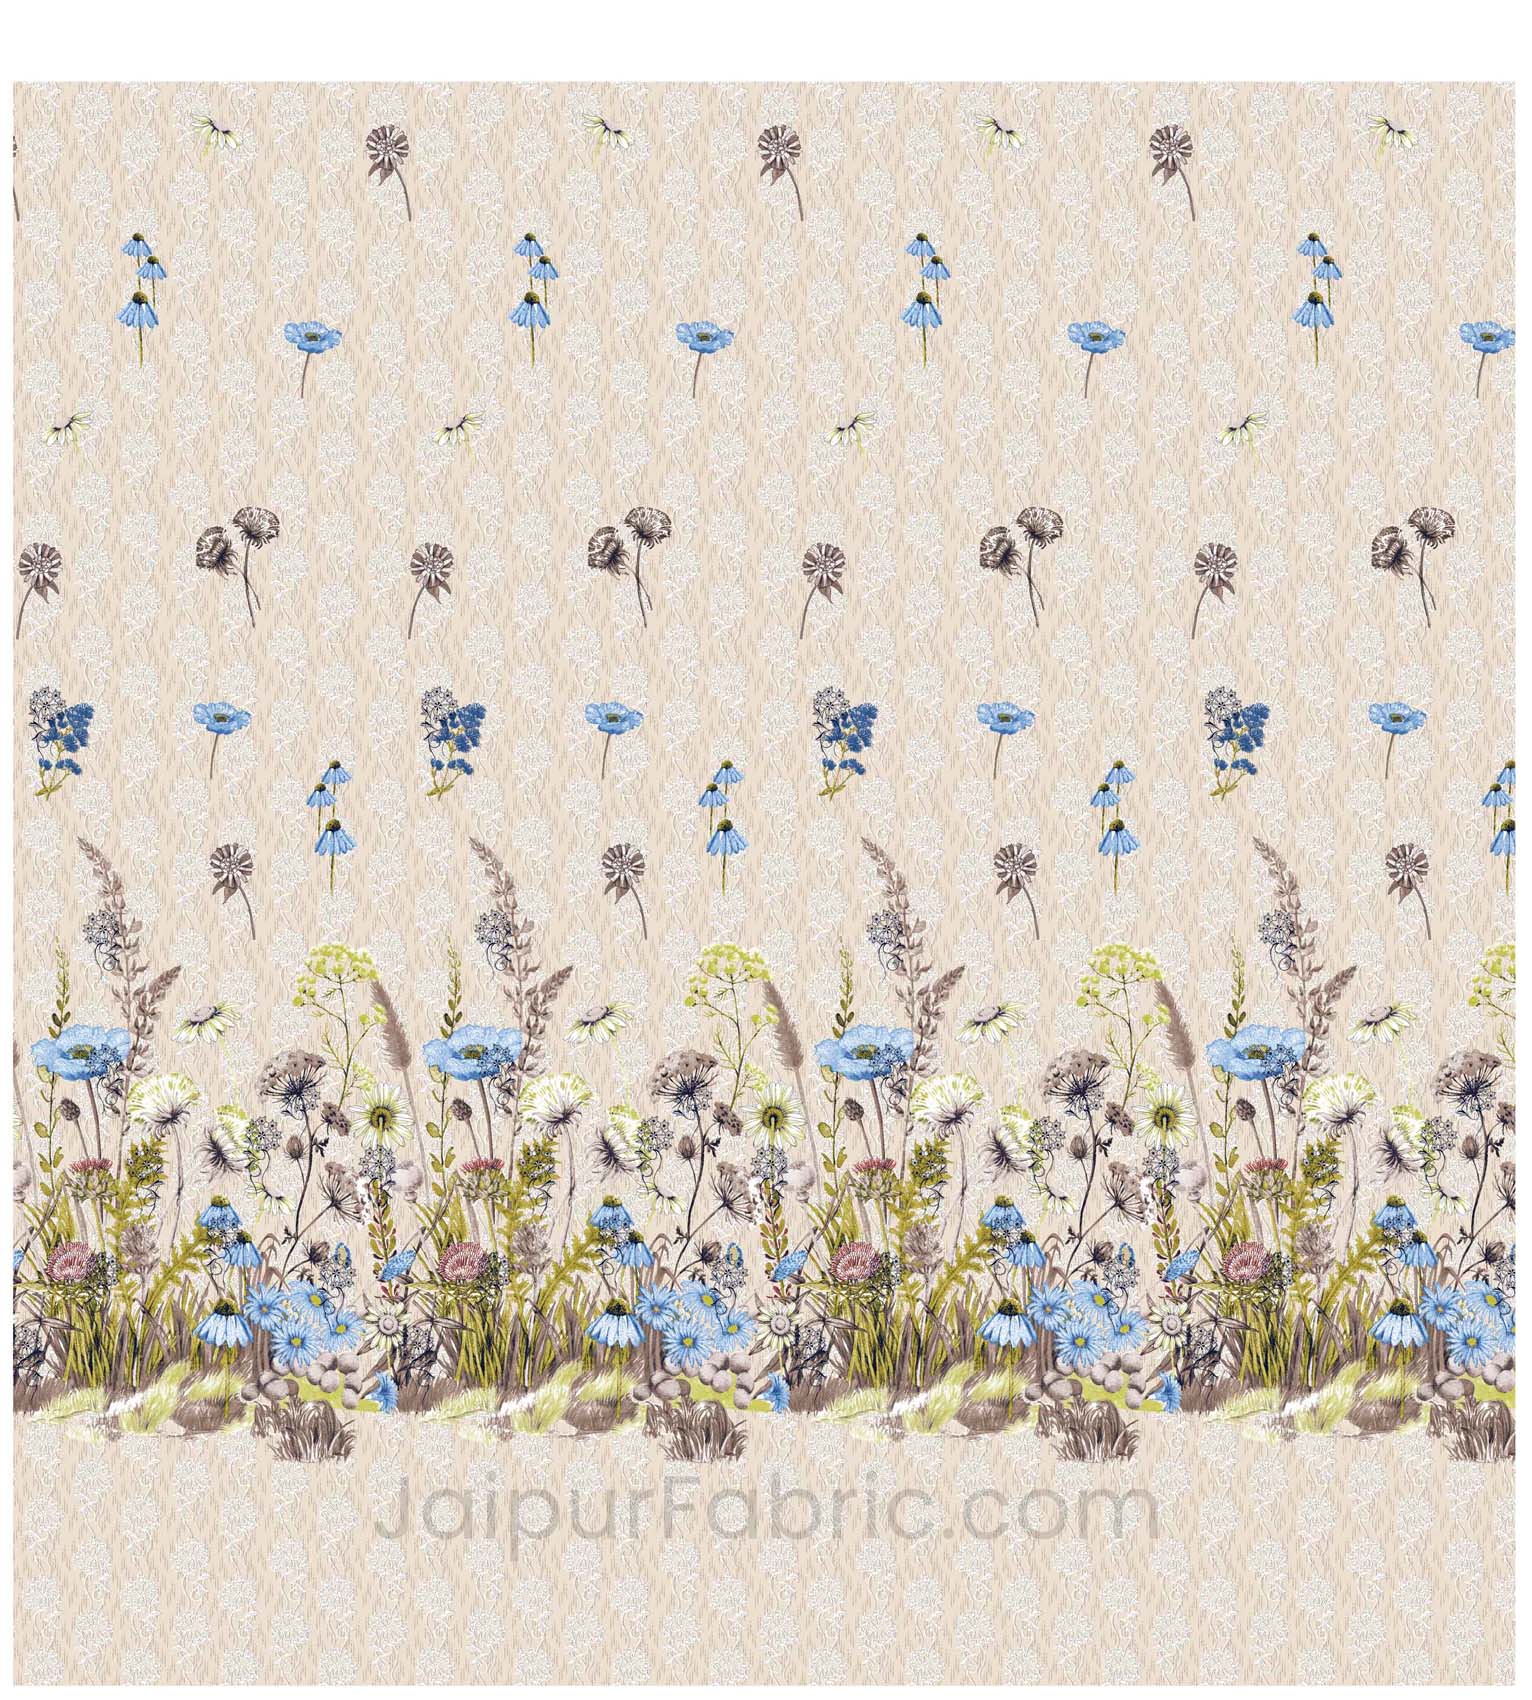 Flora Land Digital Print Luxury Cotton King Size Bedsheet